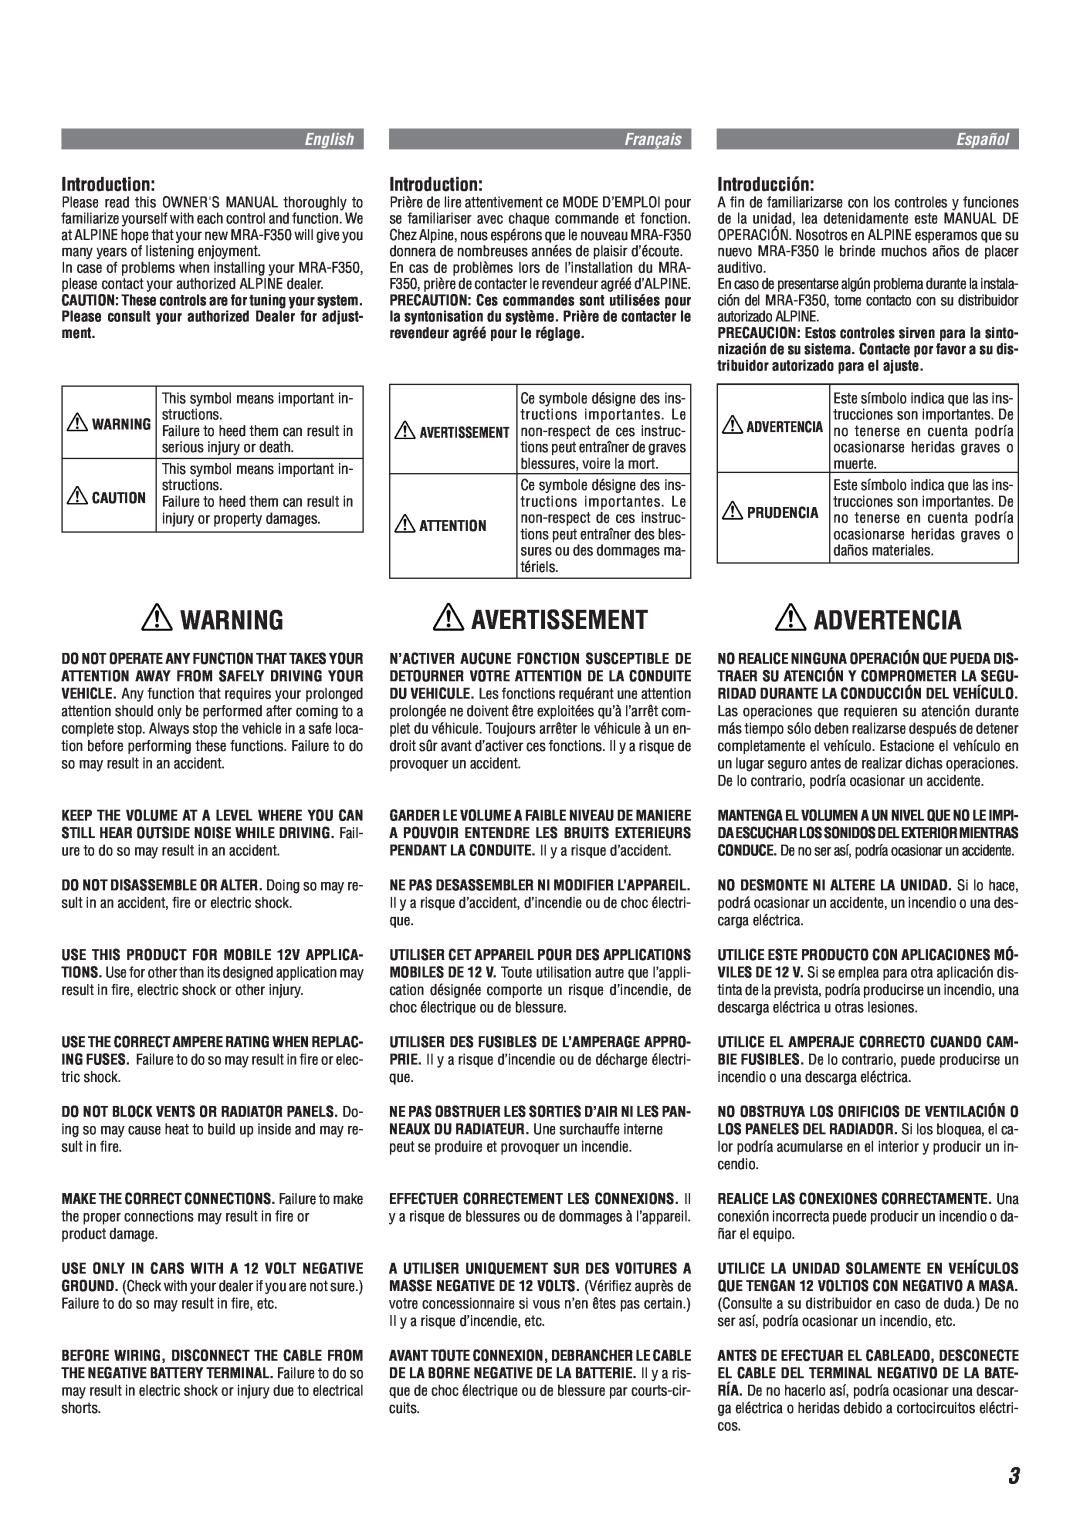 Alpine MRA-F350 owner manual Avertissement, Advertencia, Introduction, Introducción, English, Français, Español 